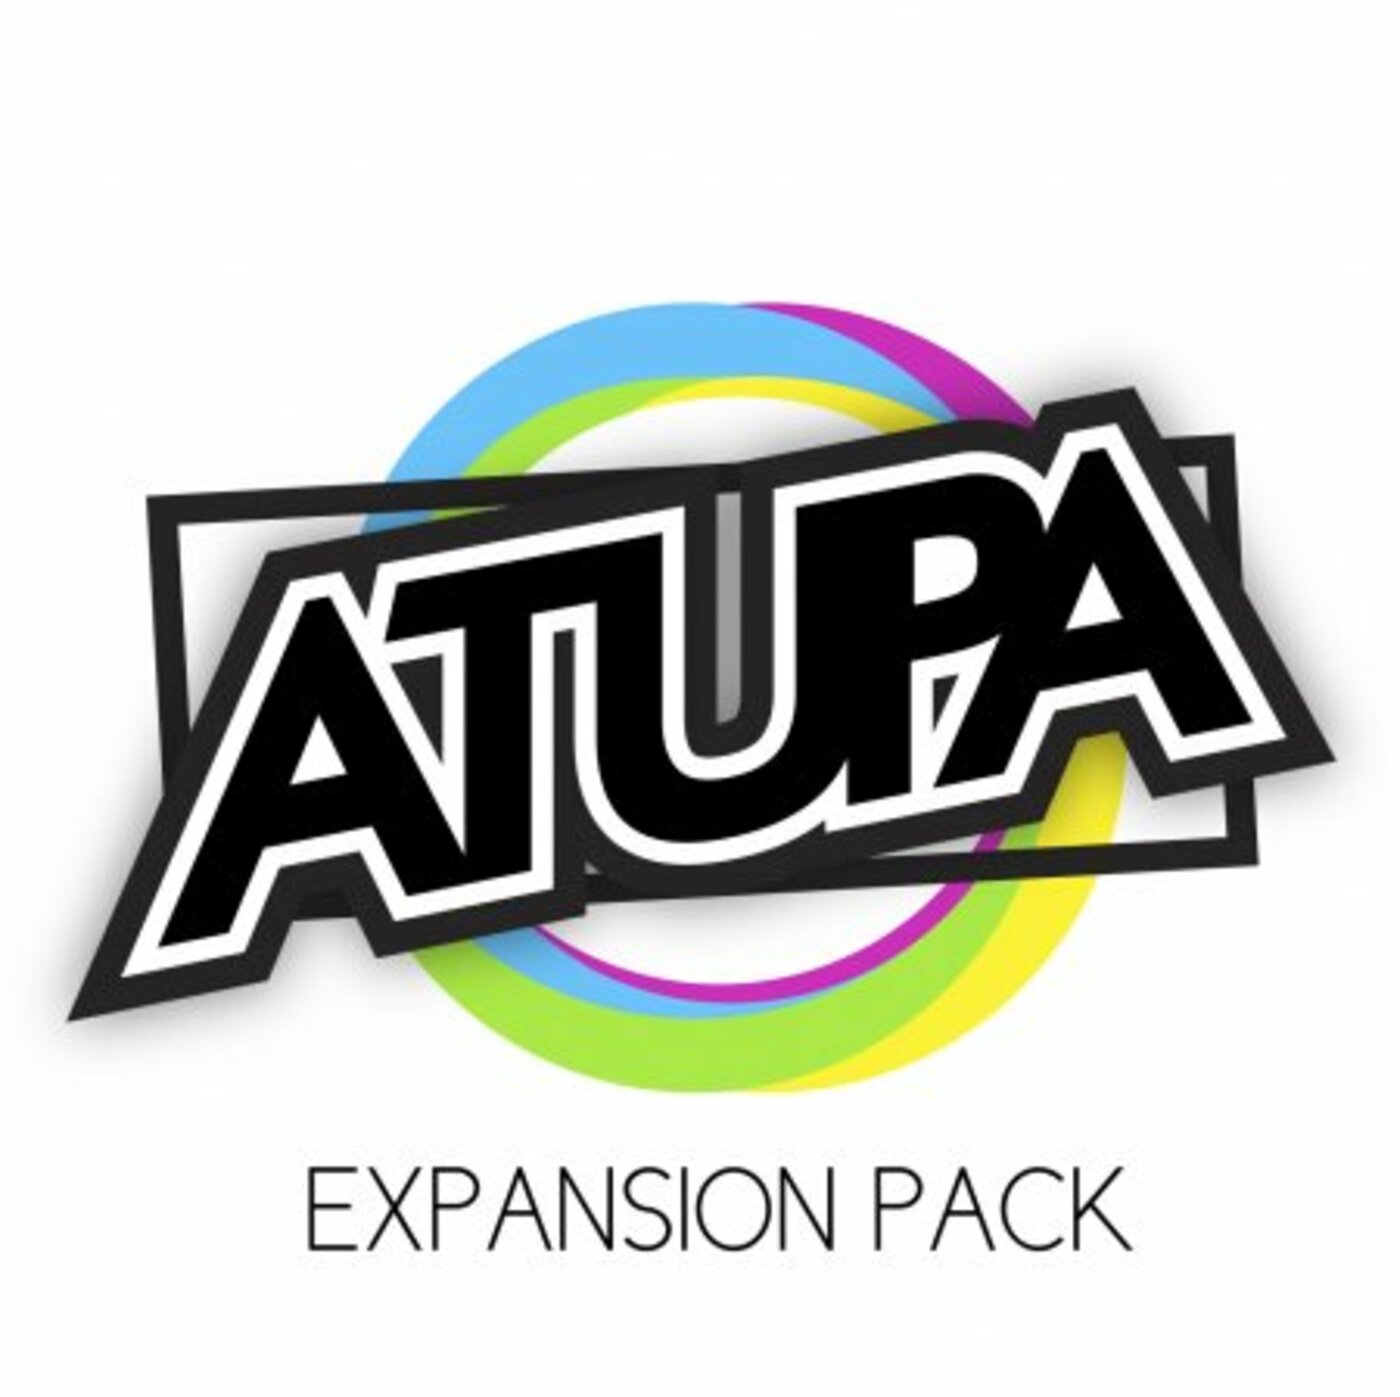 Atupa - Expansion Pack | musica en valencià